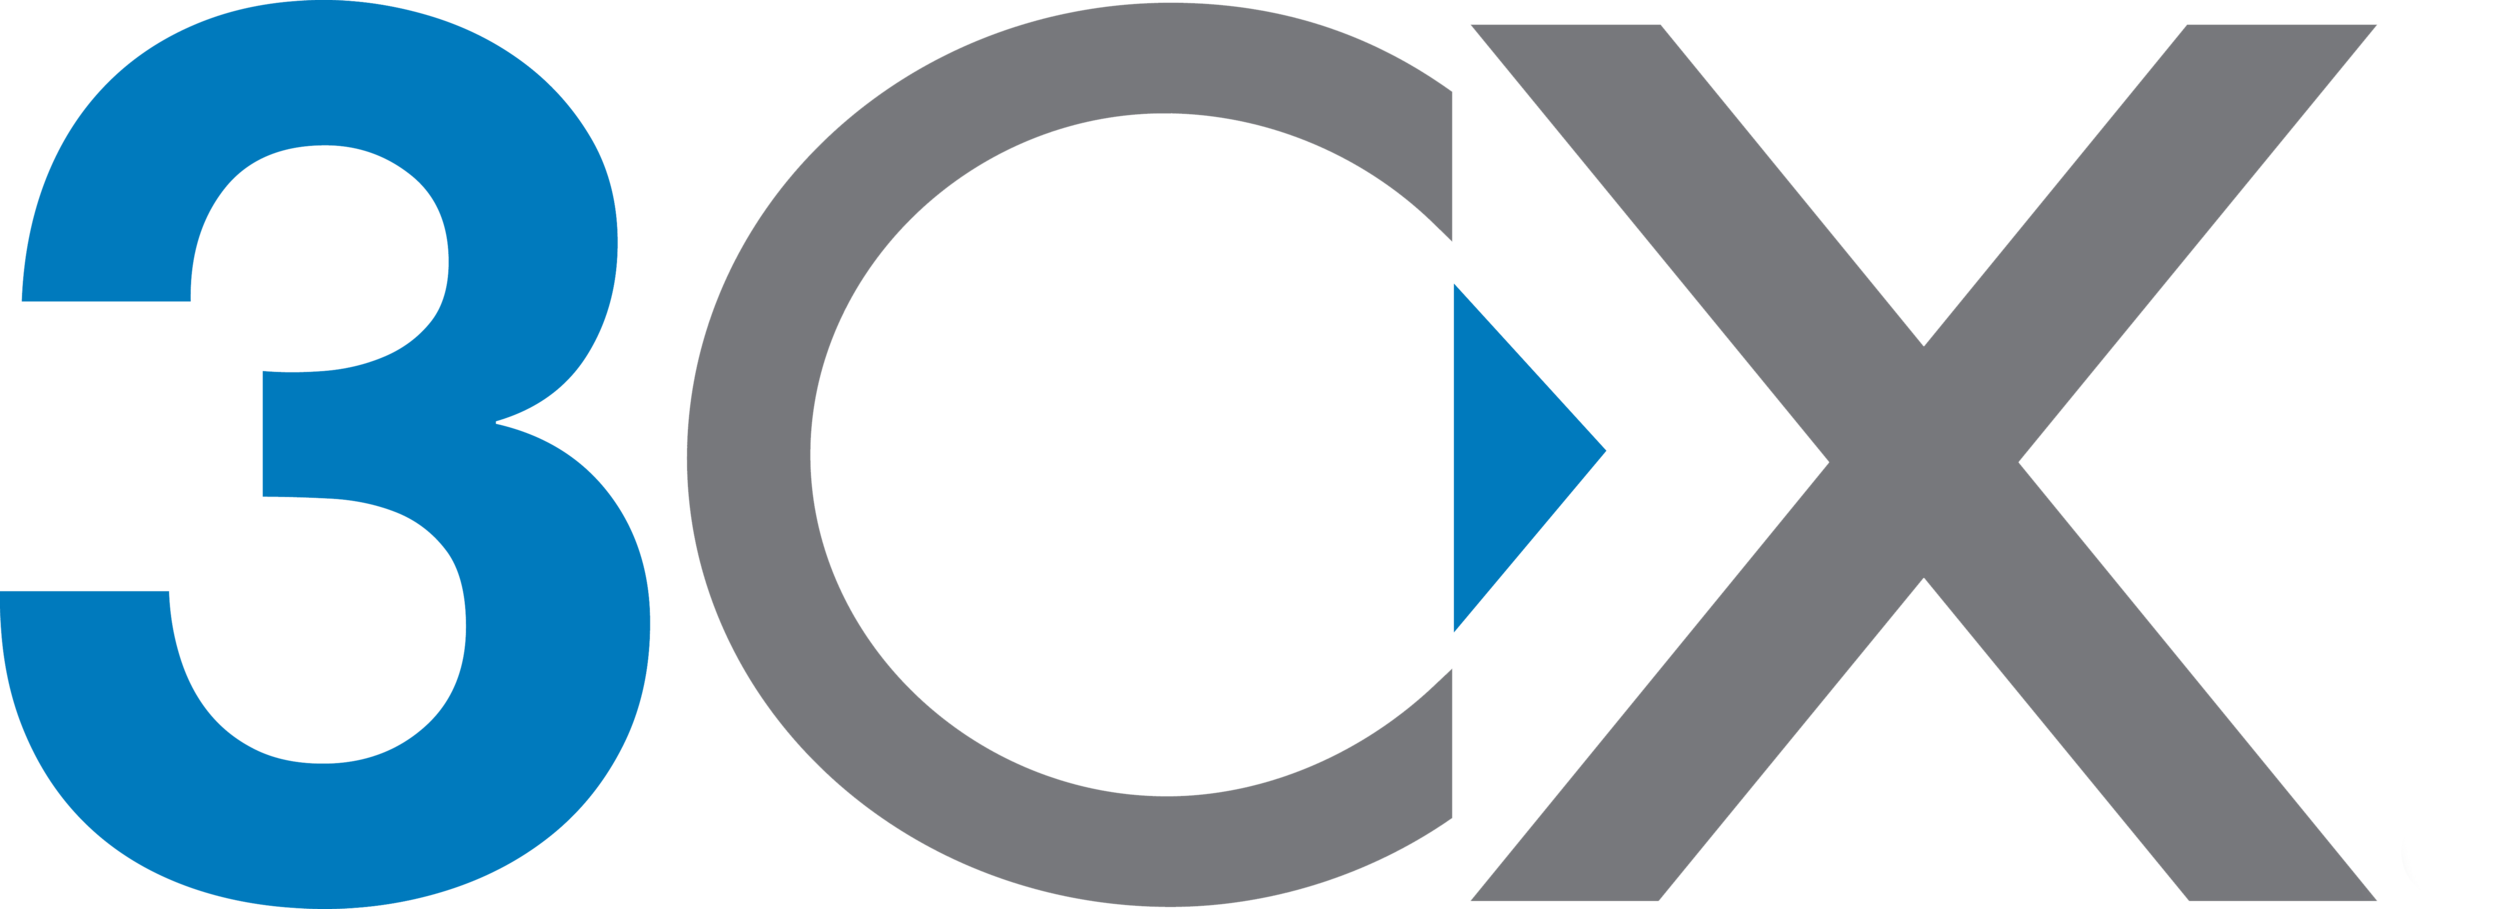 3CX-Logo-High-Resolution.png